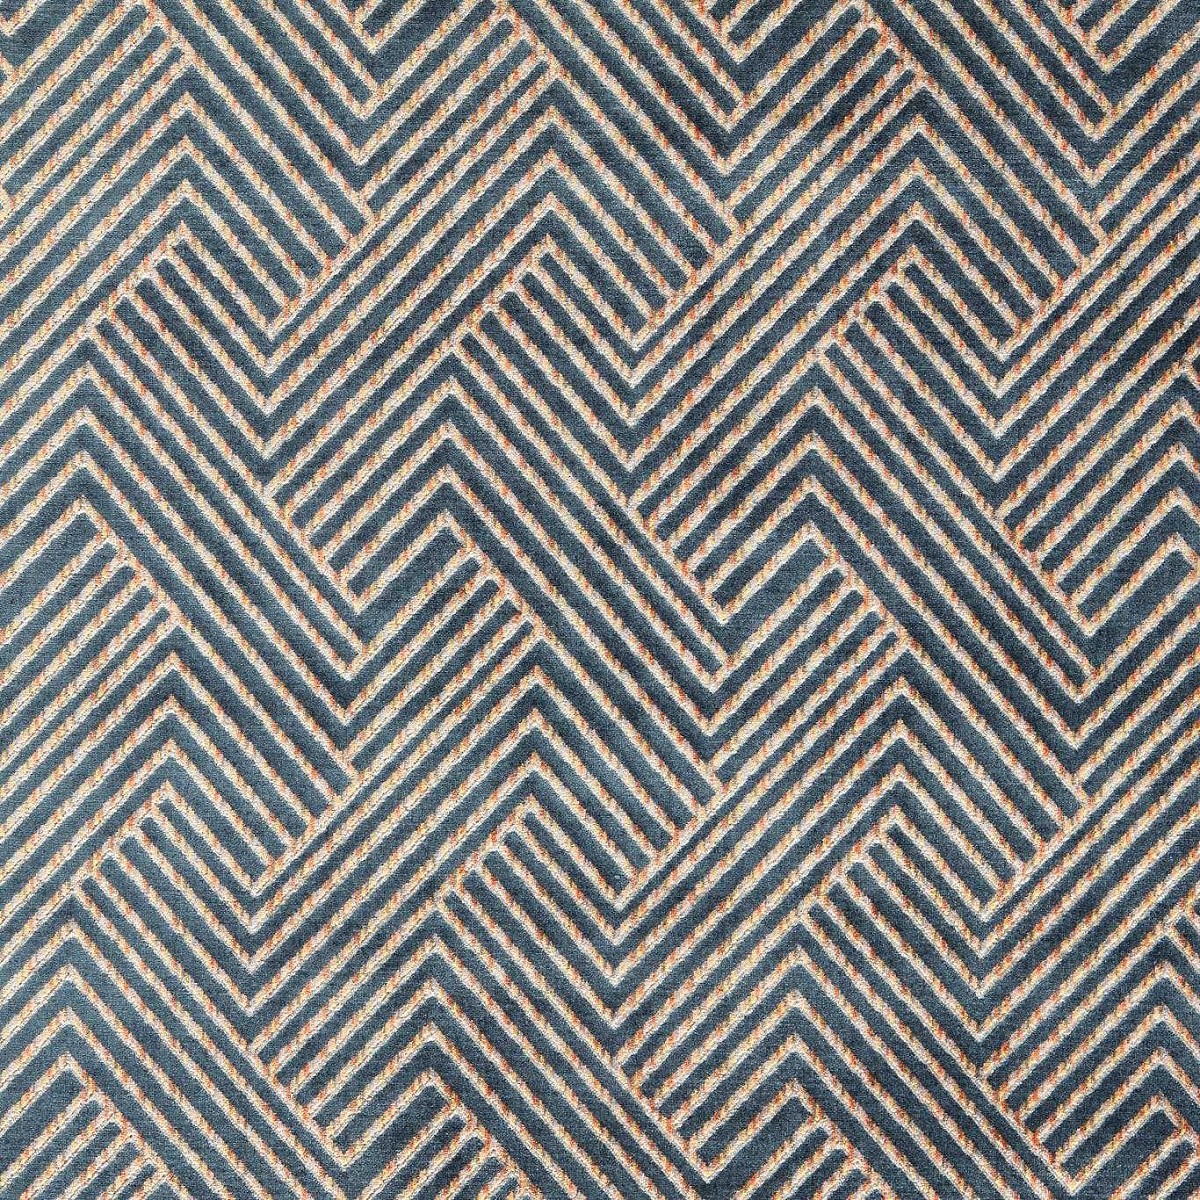 Grassetto Multi Fabric by Clarke & Clarke